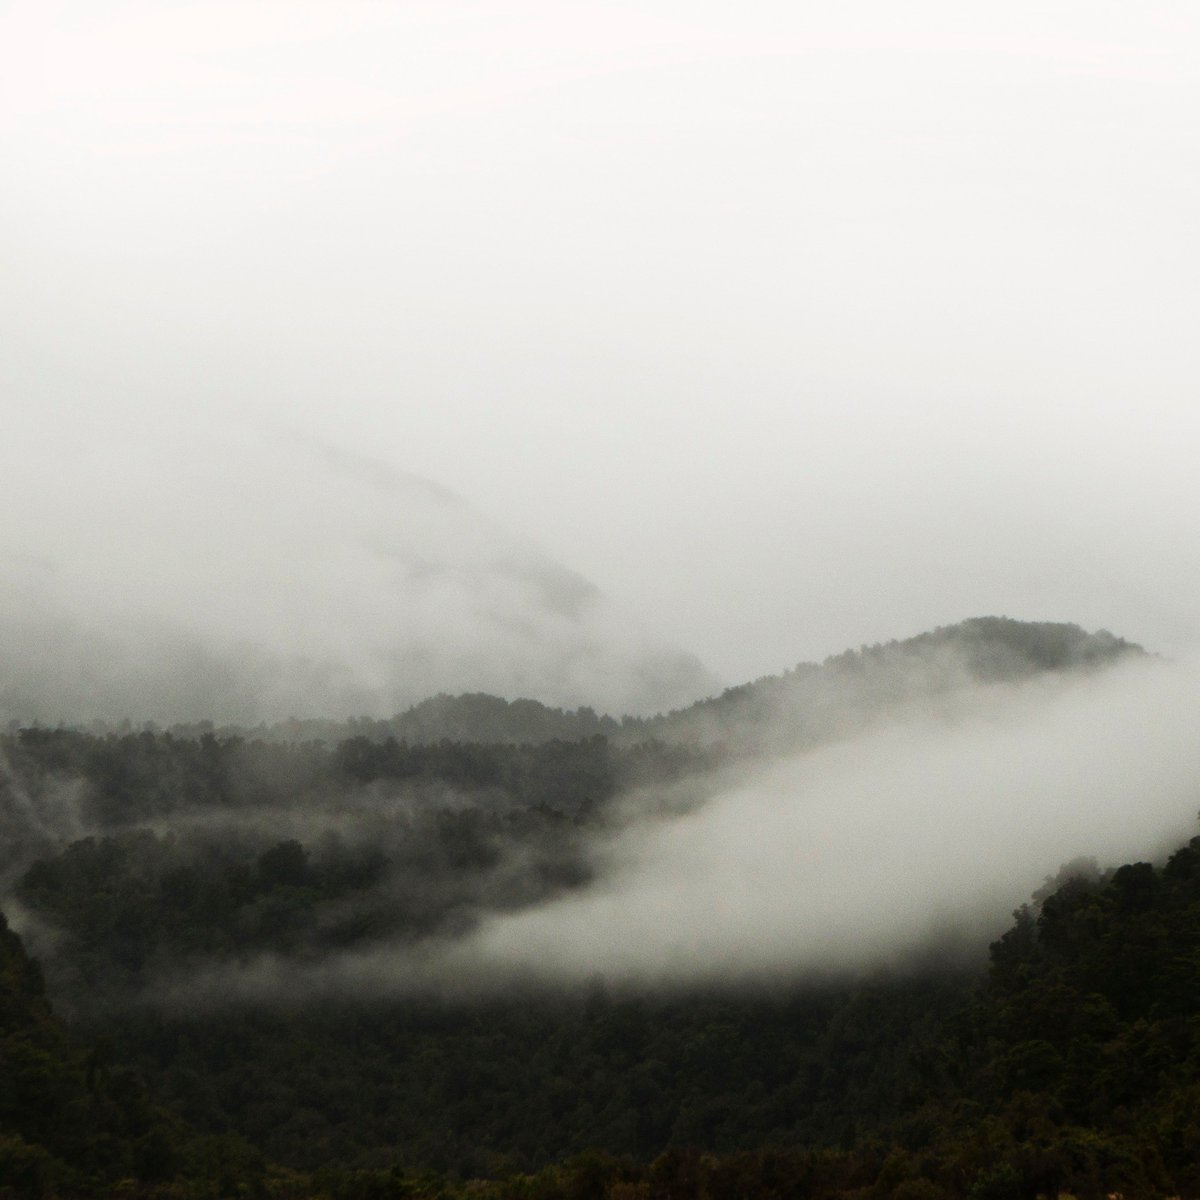 Mountain Clouds, Haast Pass.

#NewZealand #Mountains #Haast #Clouds #travel #photography #blogging #photo #travelphotography #adventure #roadtrip #samburton #somerset #nikon #travelnewzealand